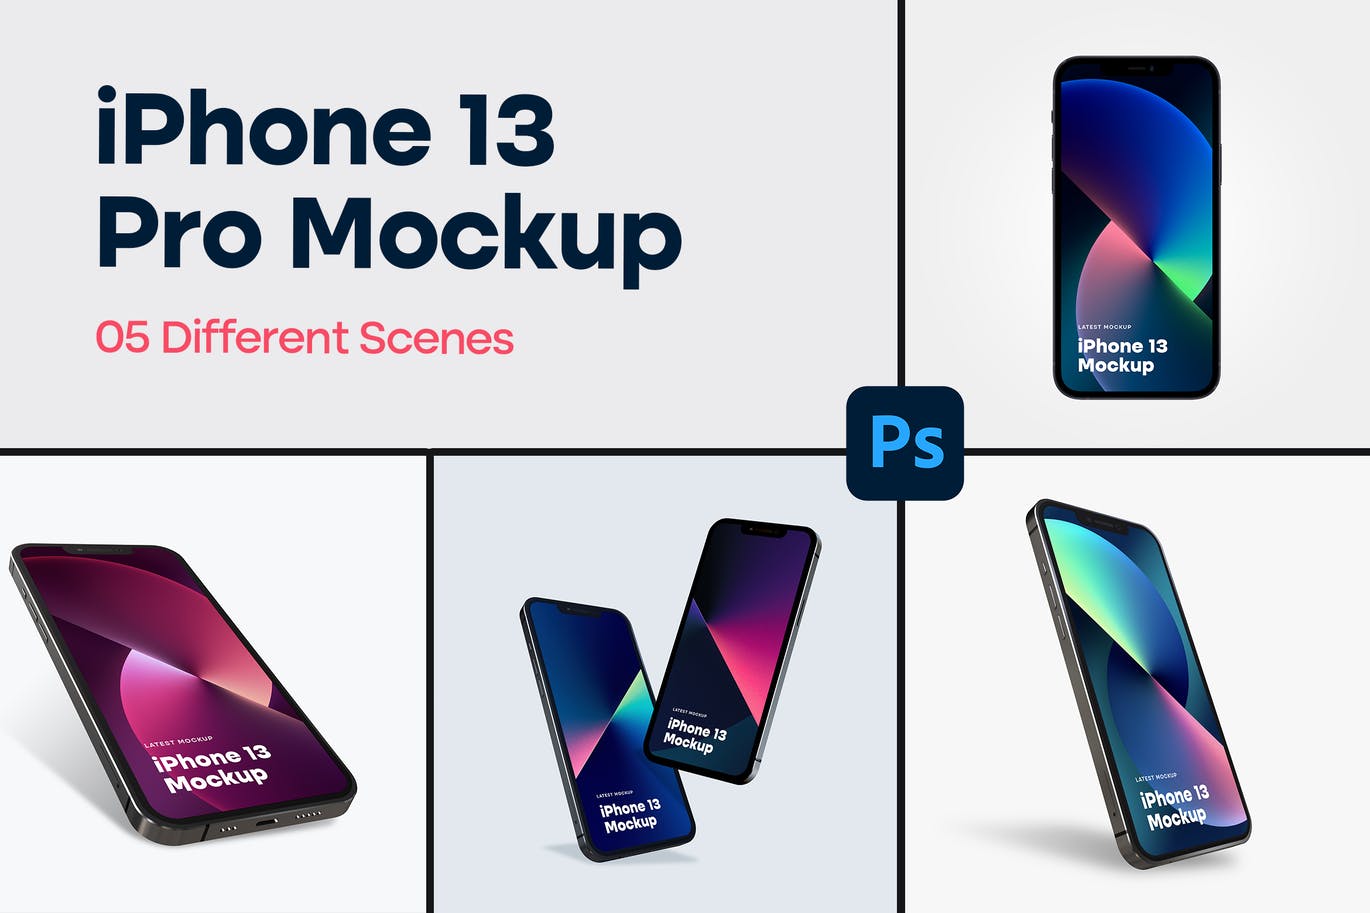 40+ Exclusive iPhone 13 Mockup Templates [2021] - Decolore